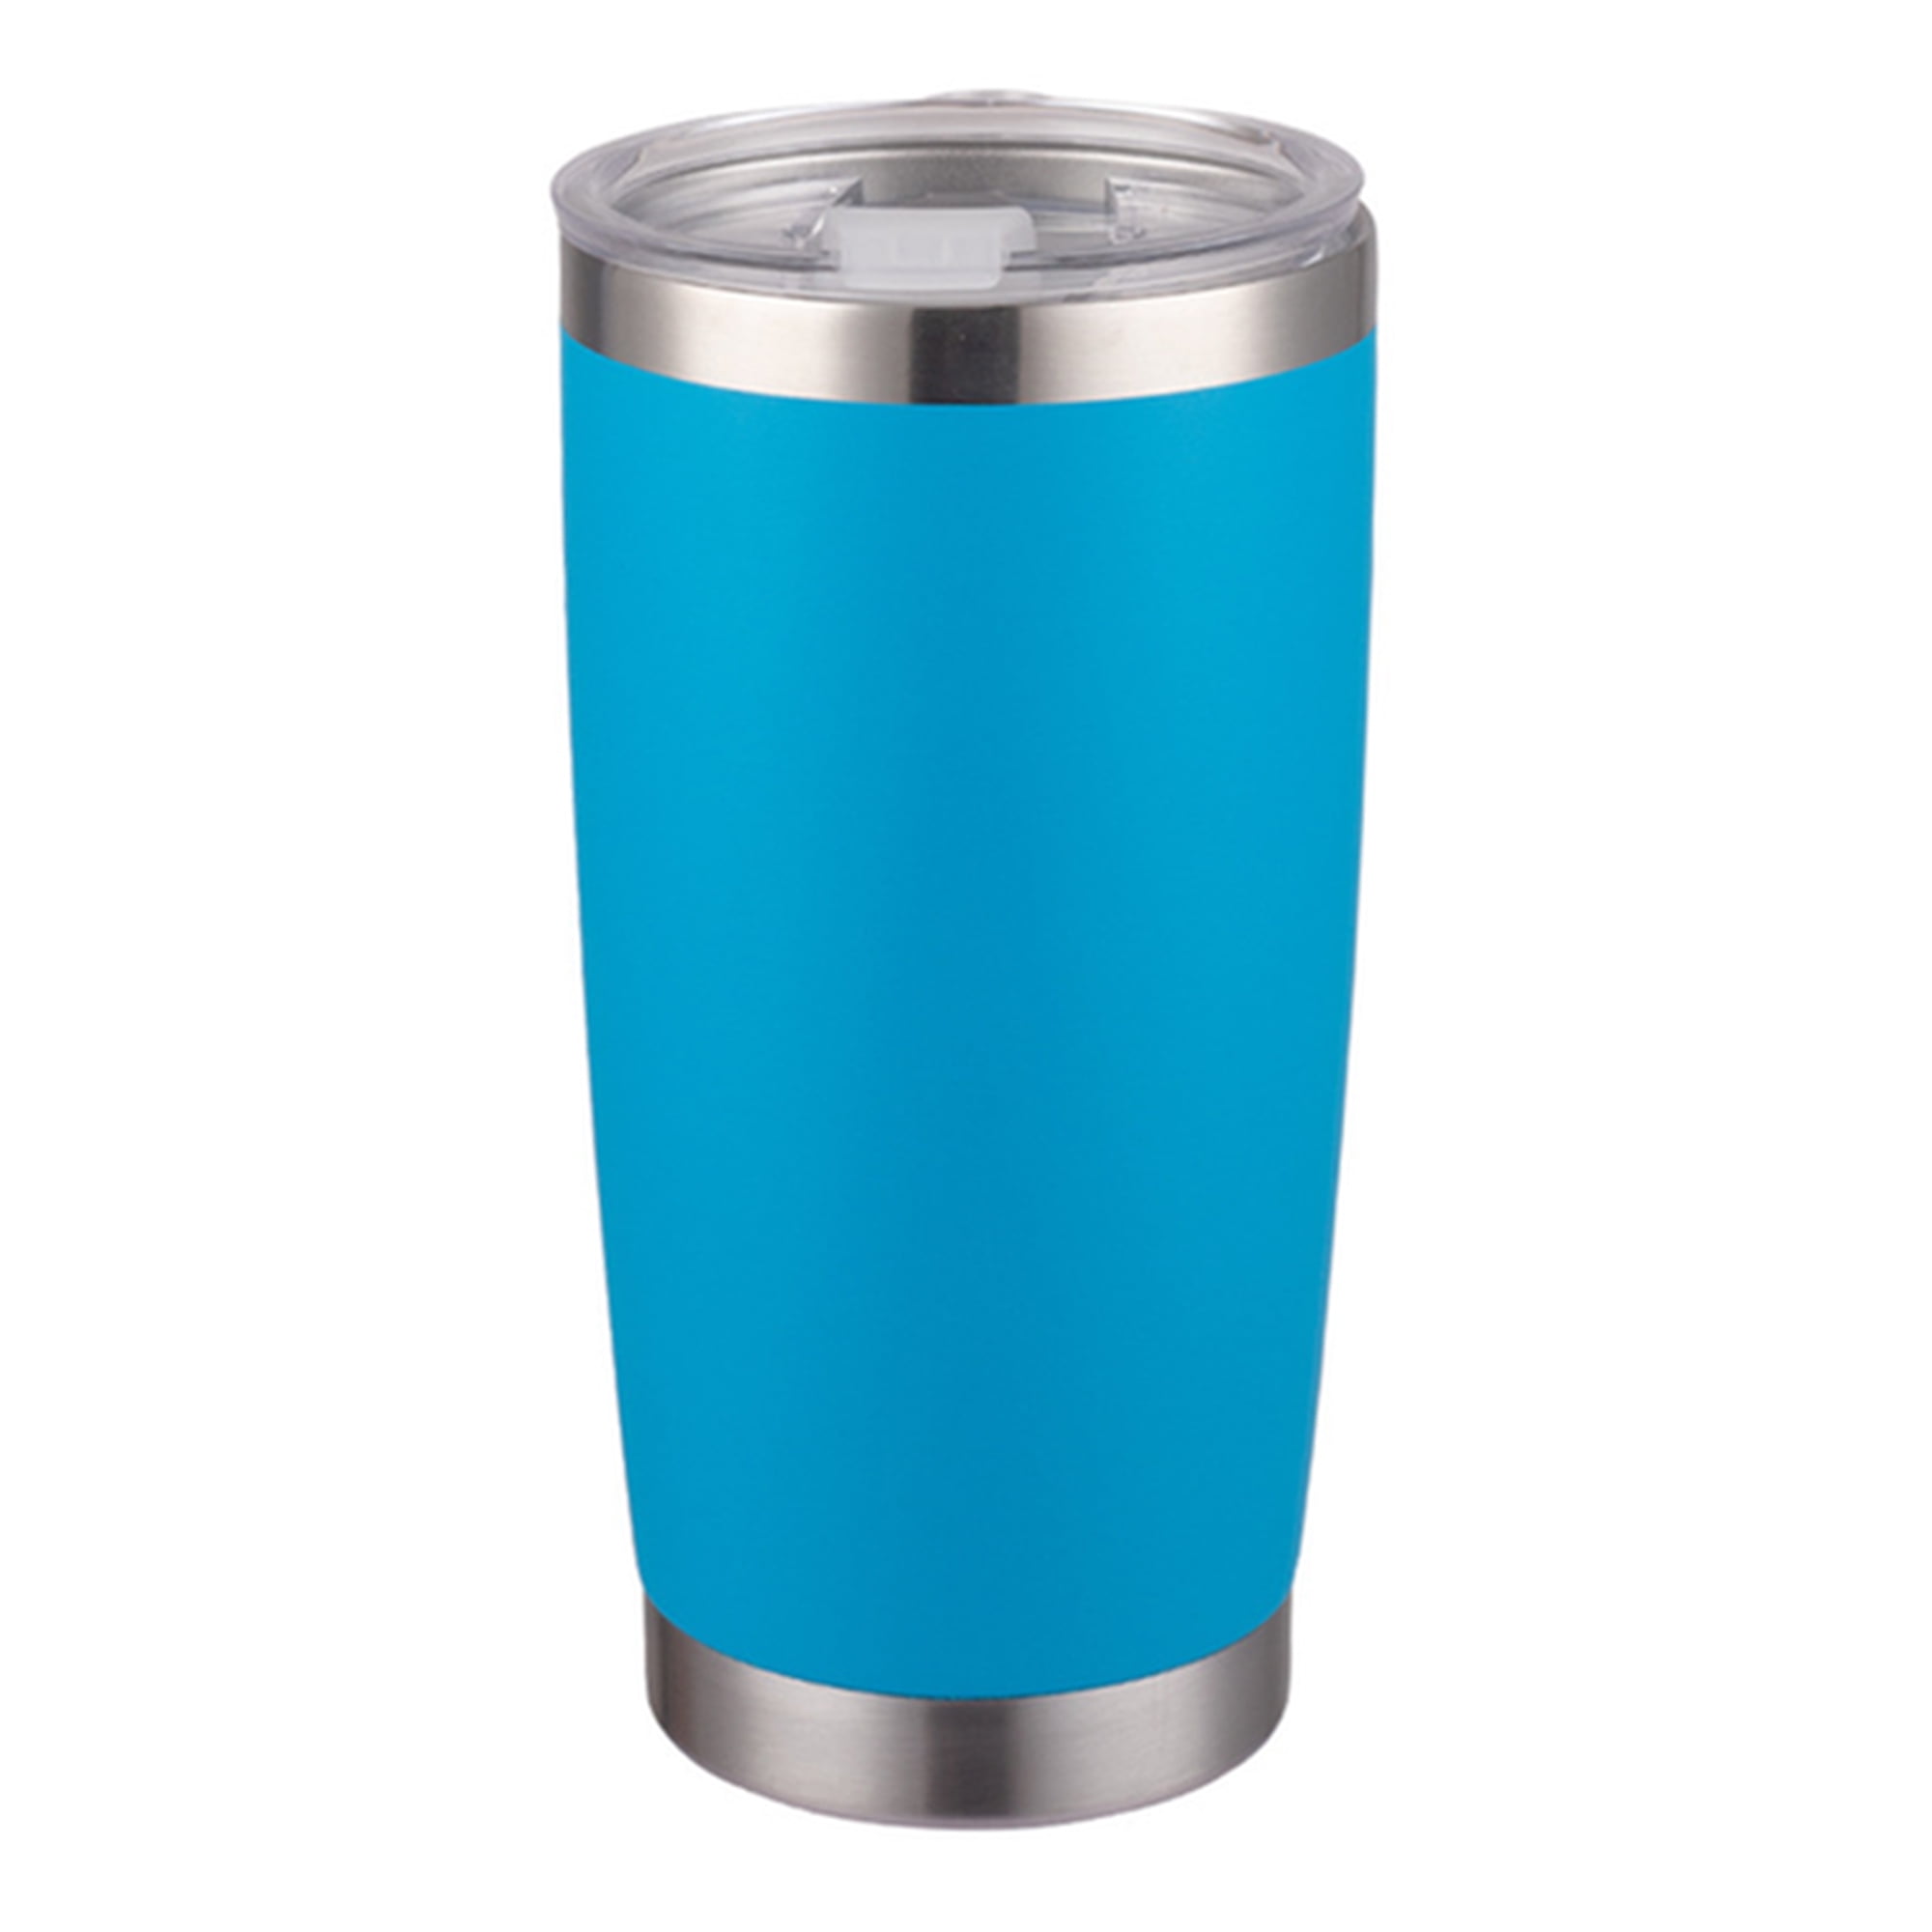 HP Hewlett Packard Travel Mug Blue Stainless Steel Tumbler Coffee Cup